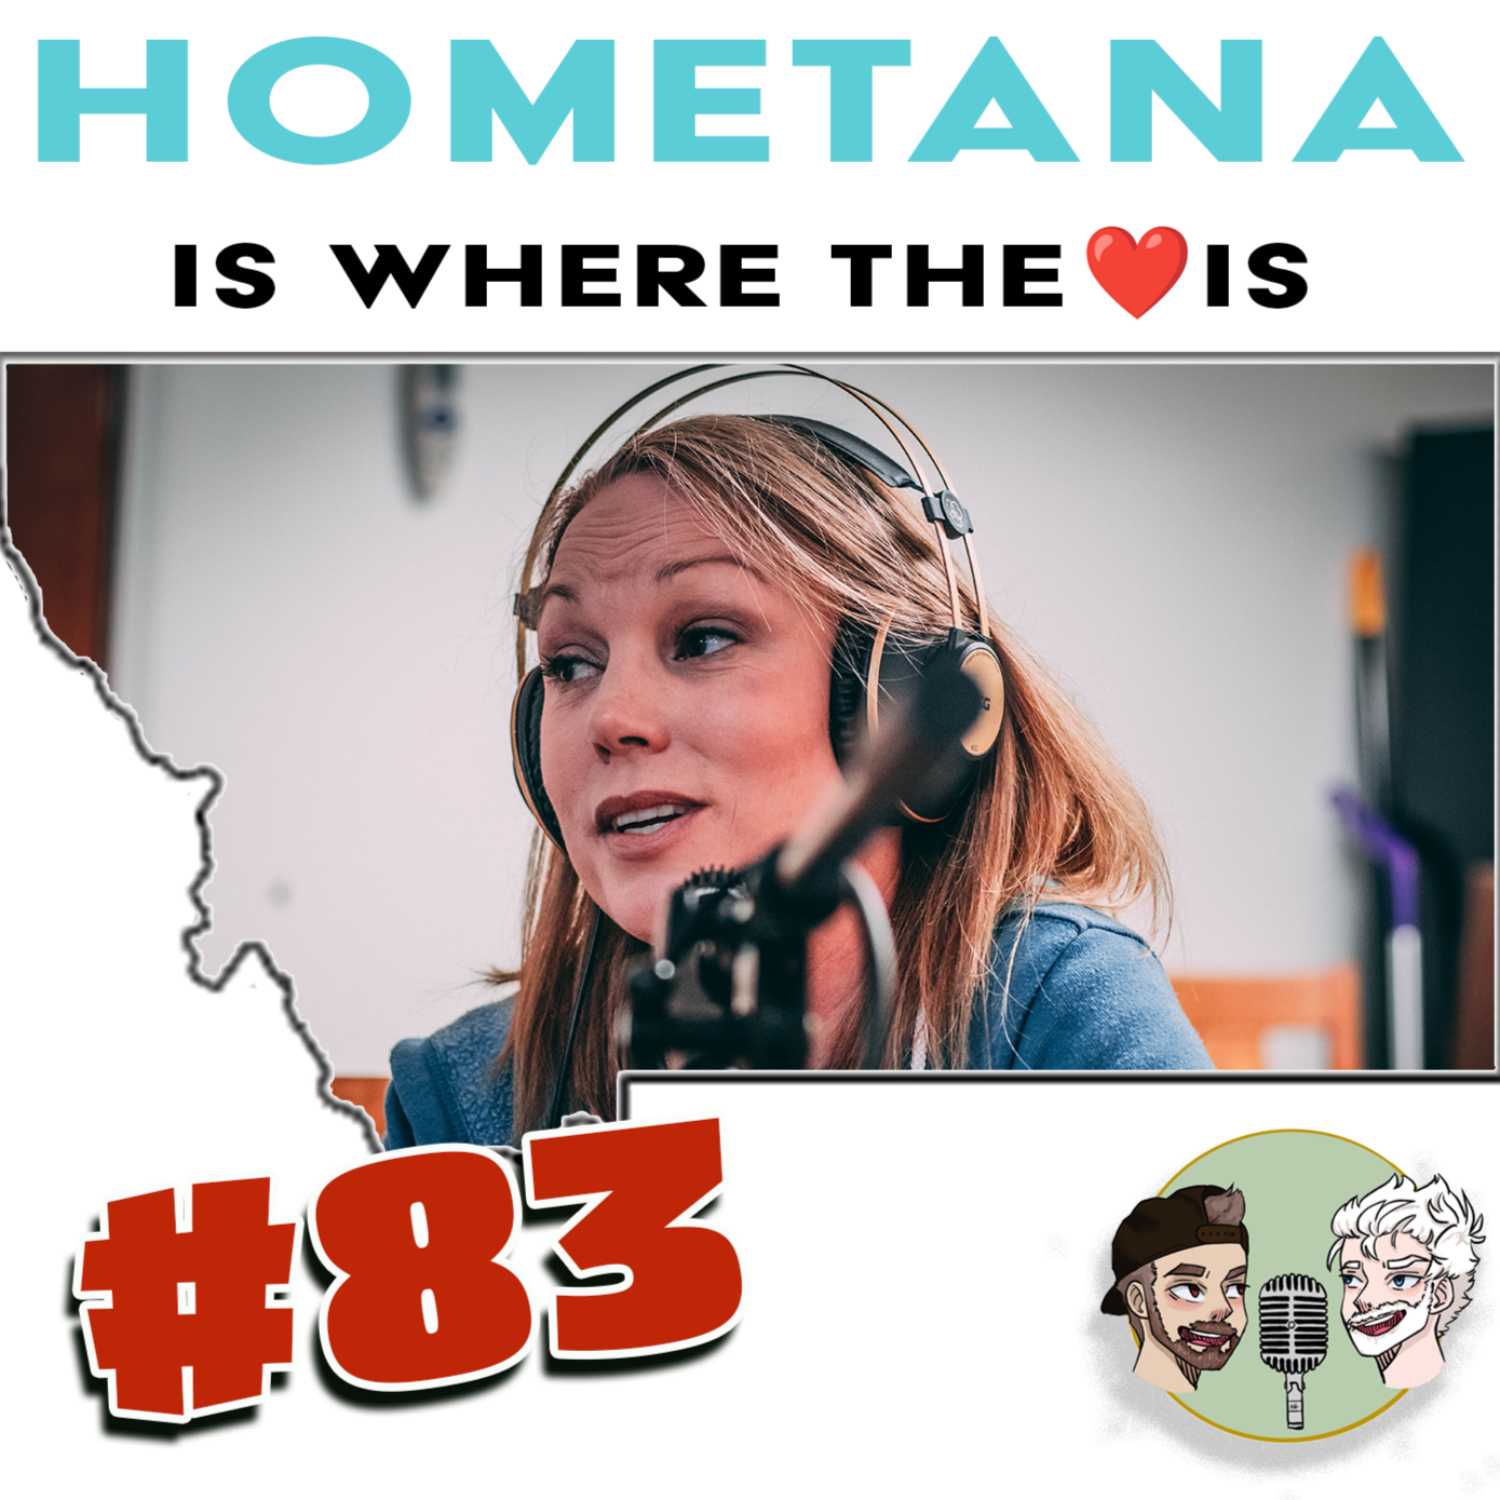 83: Hometana is where the ❤️ is